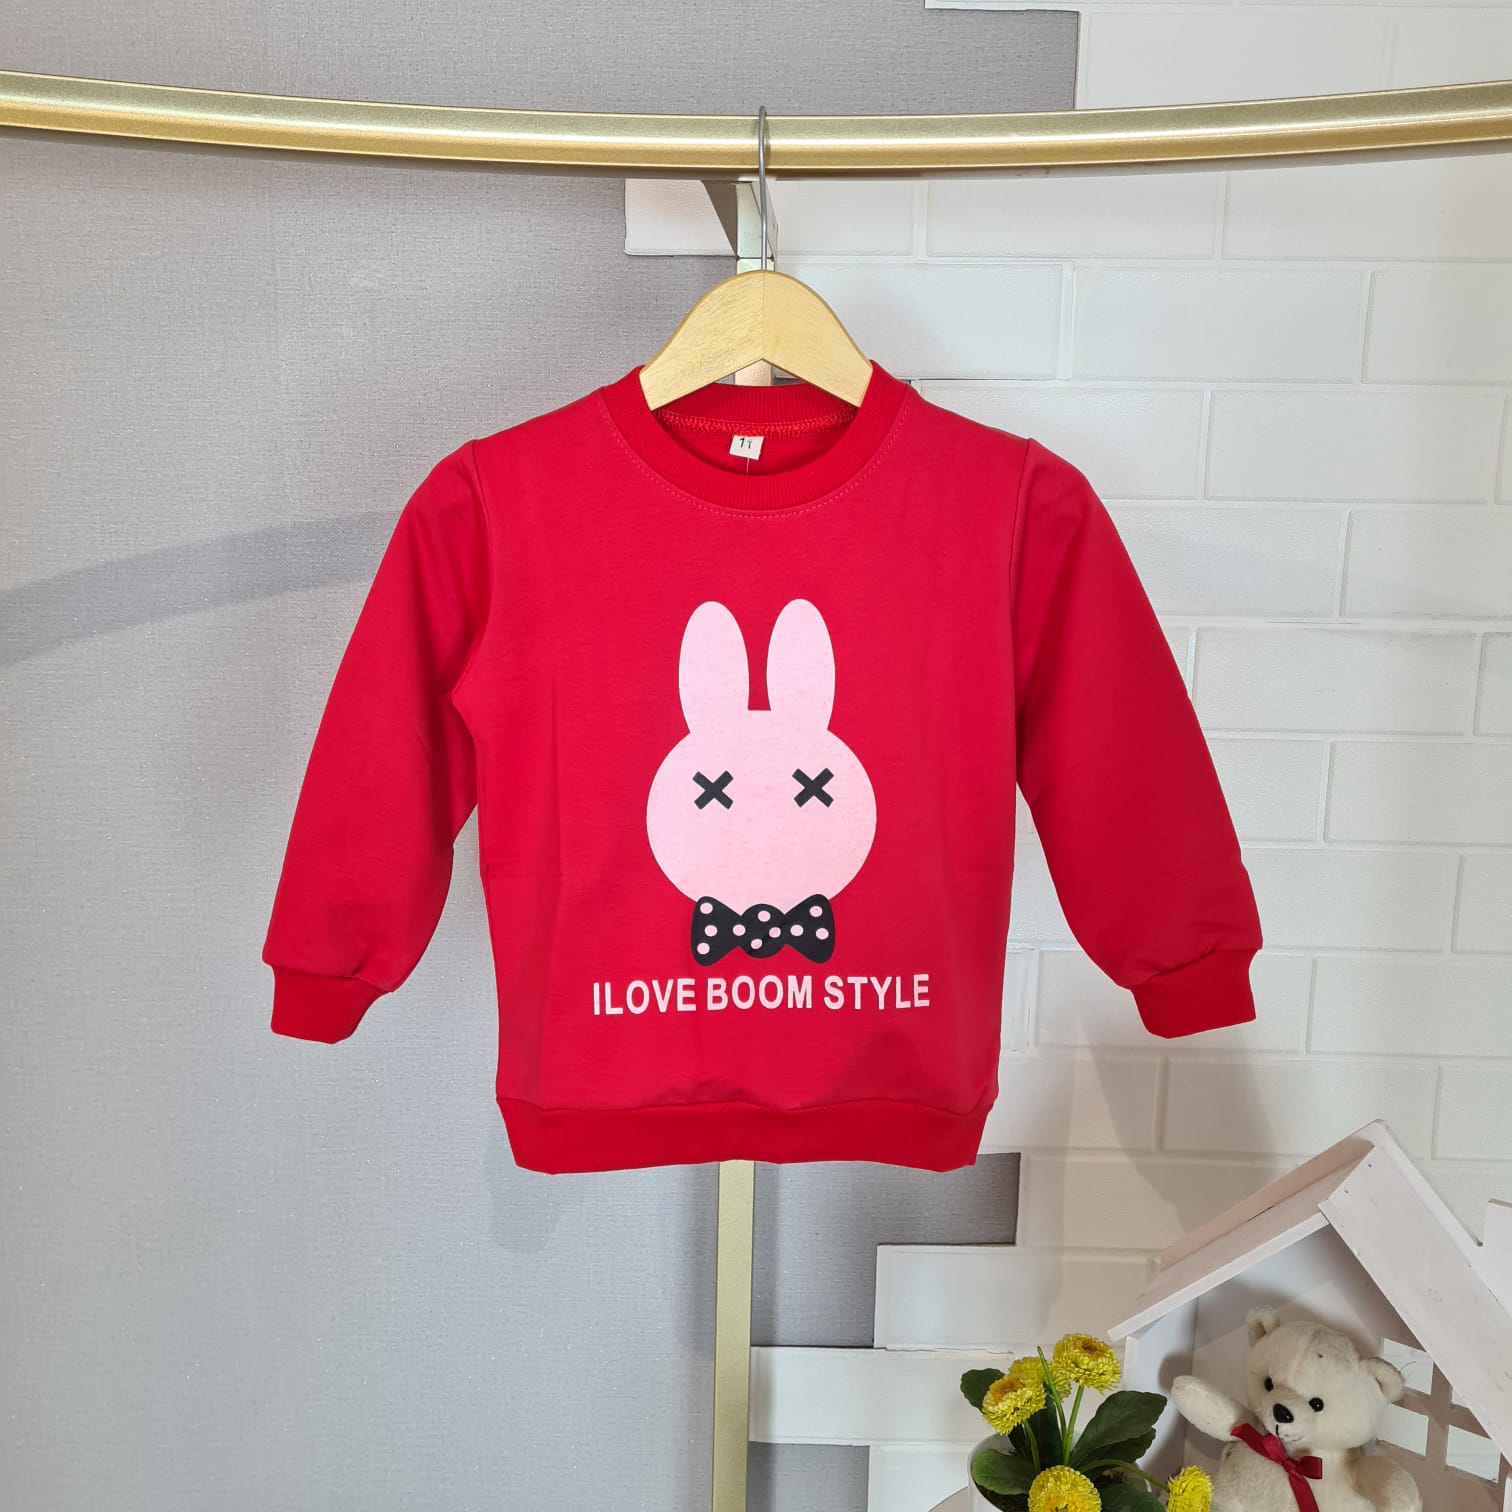 [102410] - Baju Atasan Sweater Fashion Import Anak Perempuan - Motif Ribbon Bunny